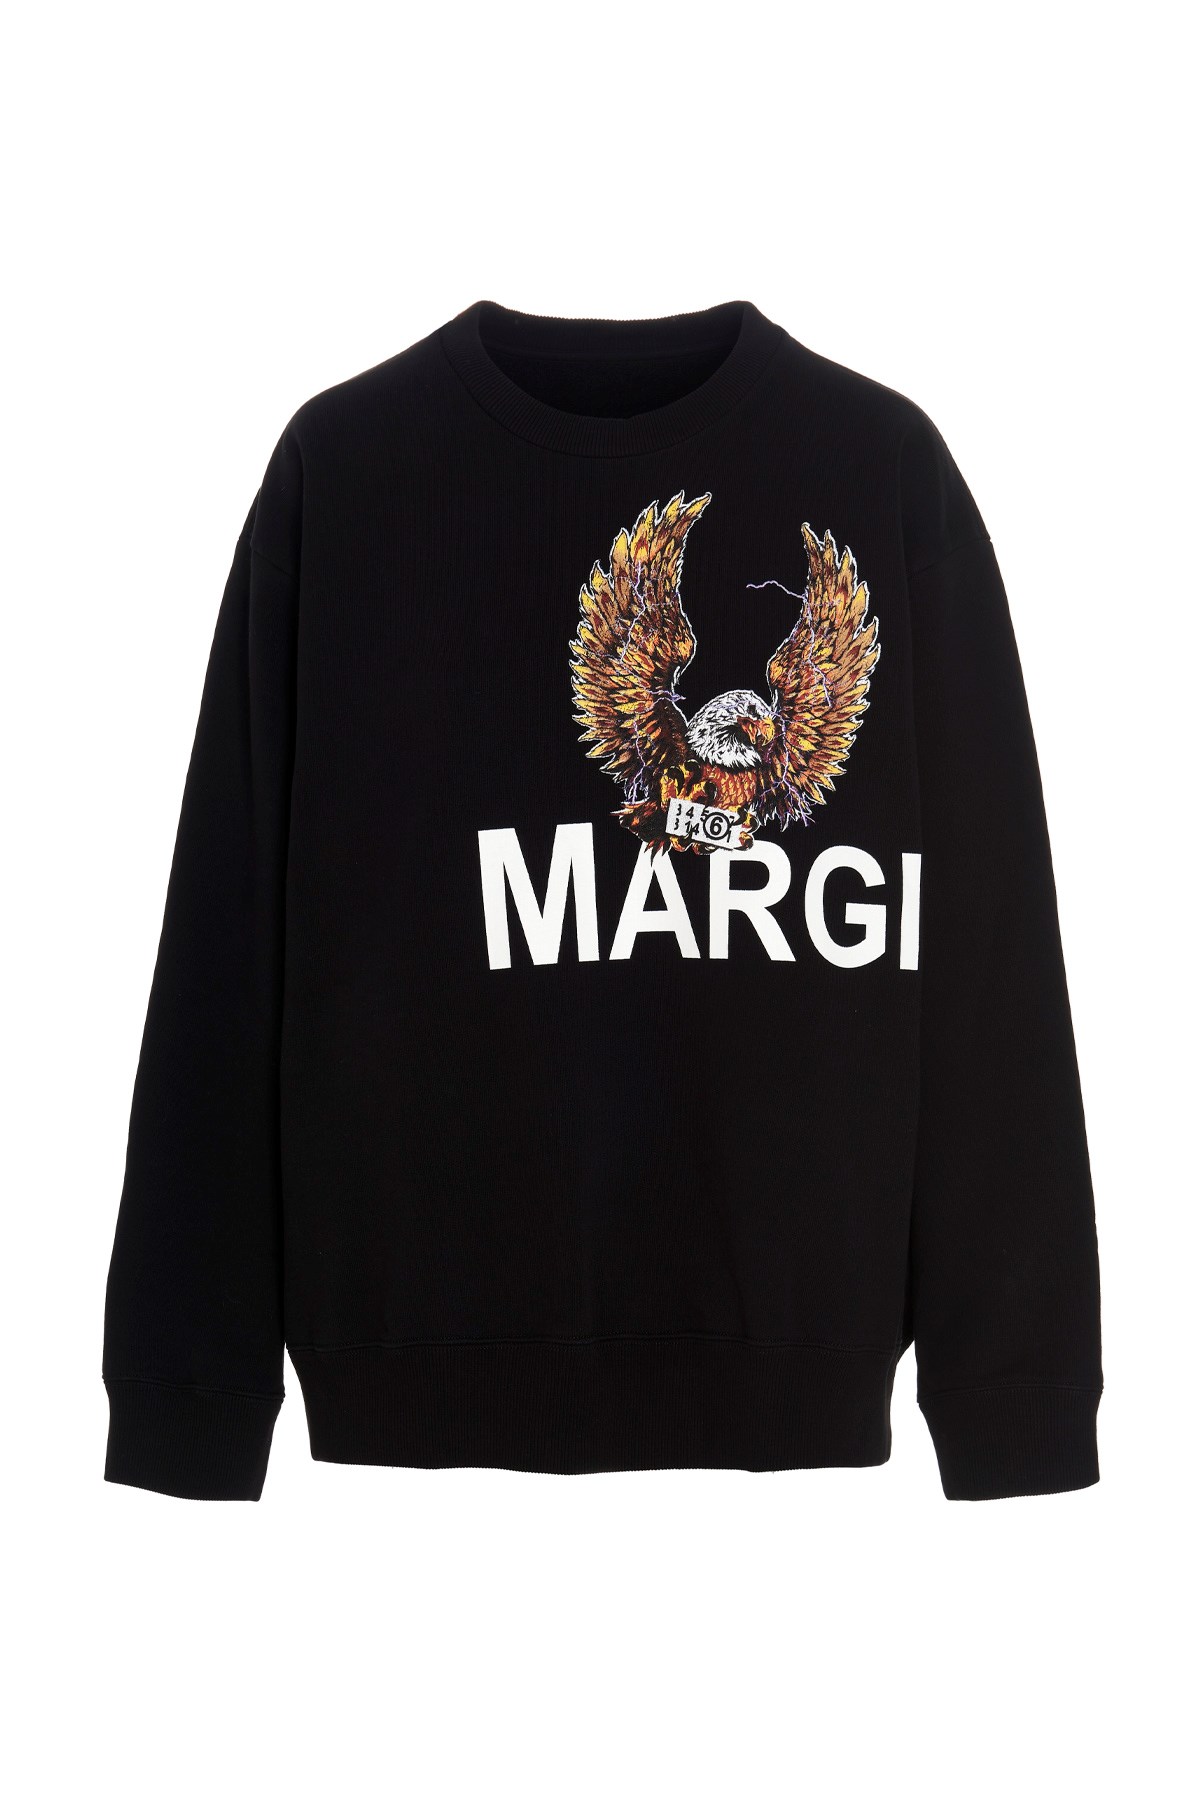 MM6 MAISON MARGIELA Logo Print Sweatshirt